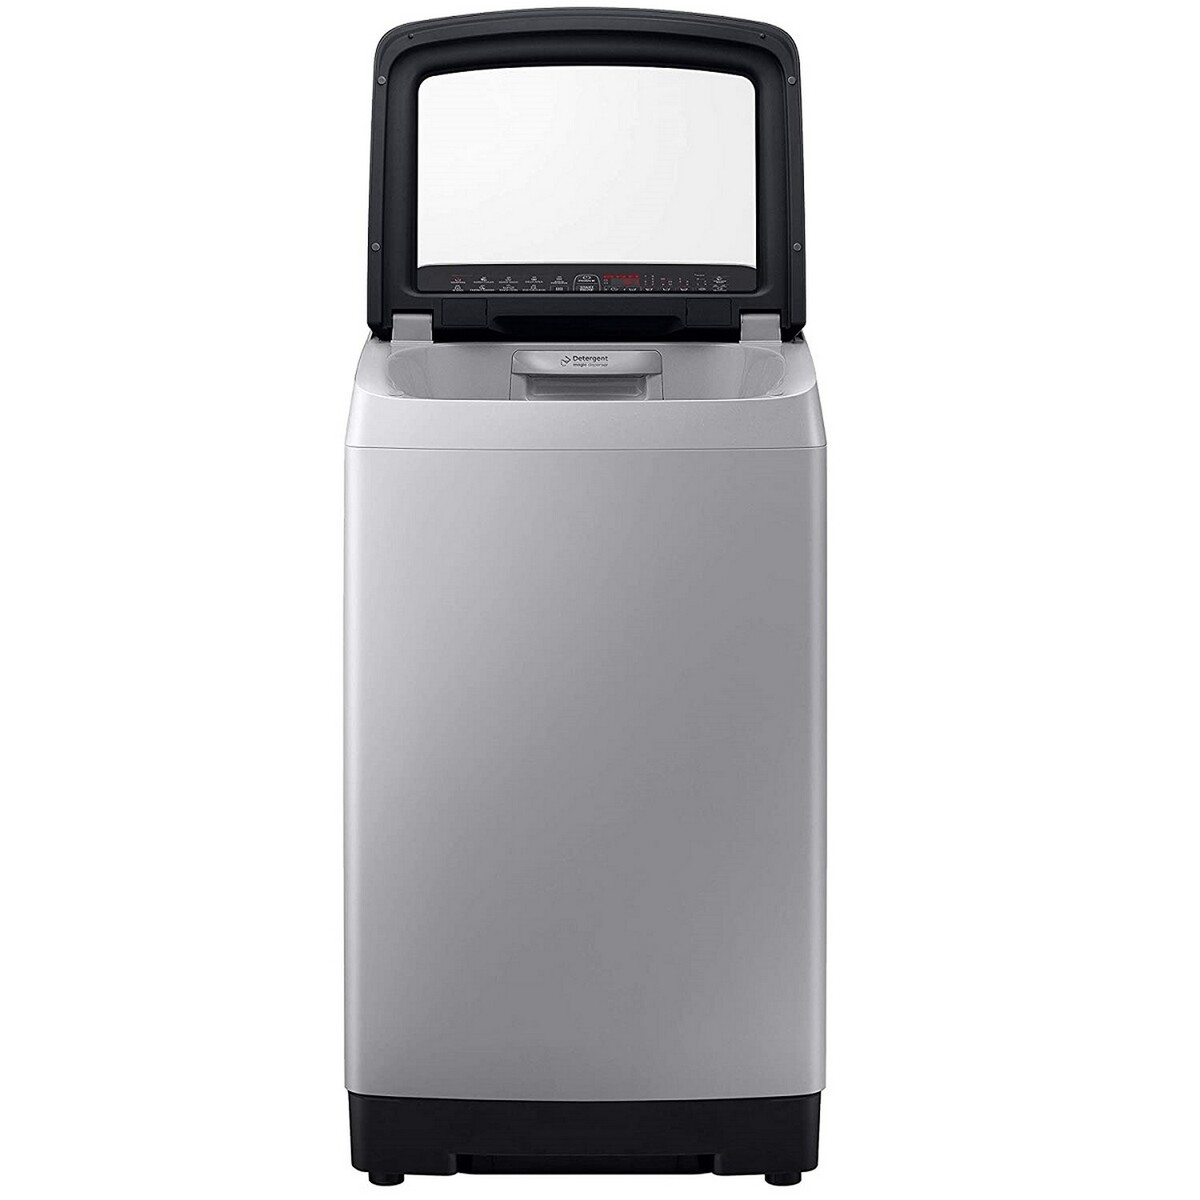 Samsung Fully Automatic Top Load Washing Machine WA65N4261SS 6.5kg